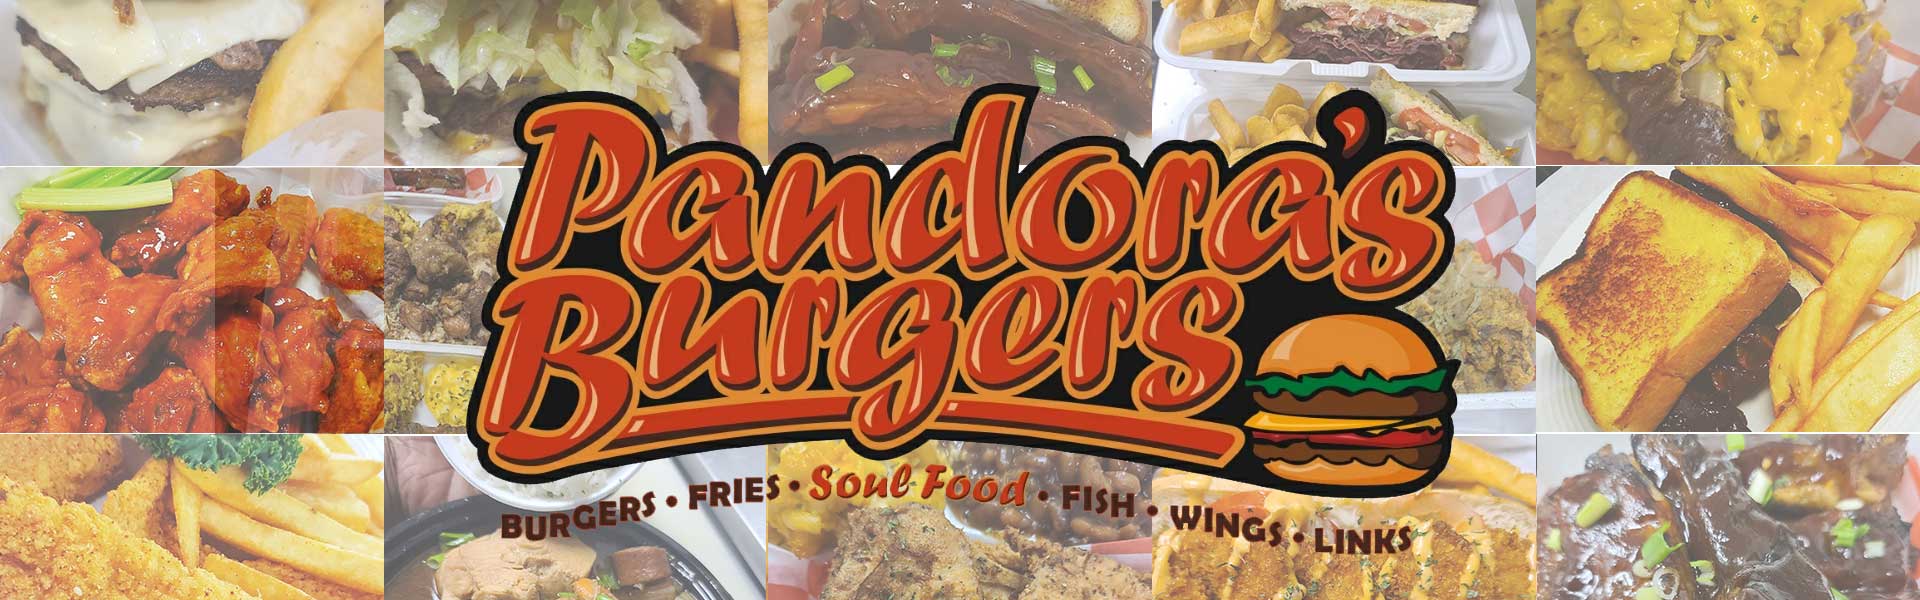 Pandora's Burgers - Burgers, fries, soul food, fish, wings and links.